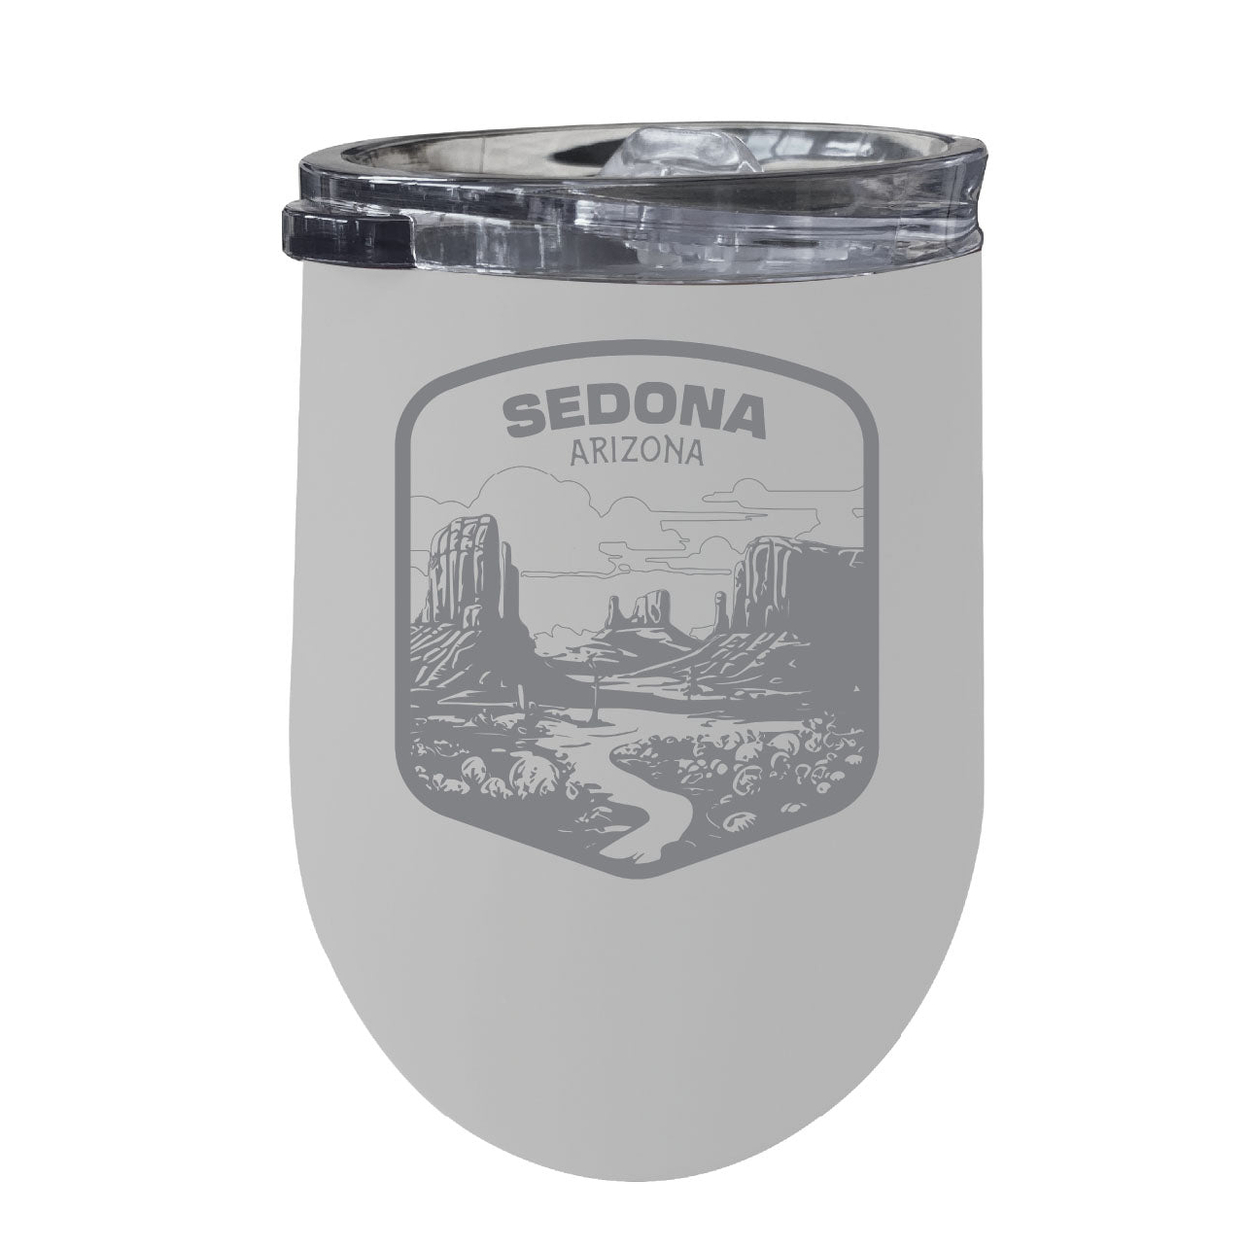 Sedona Arizona Souvenir 12 Oz Engraved Insulated Wine Stainless Steel Tumbler - Rainbow Glitter Gray,,2-Pack